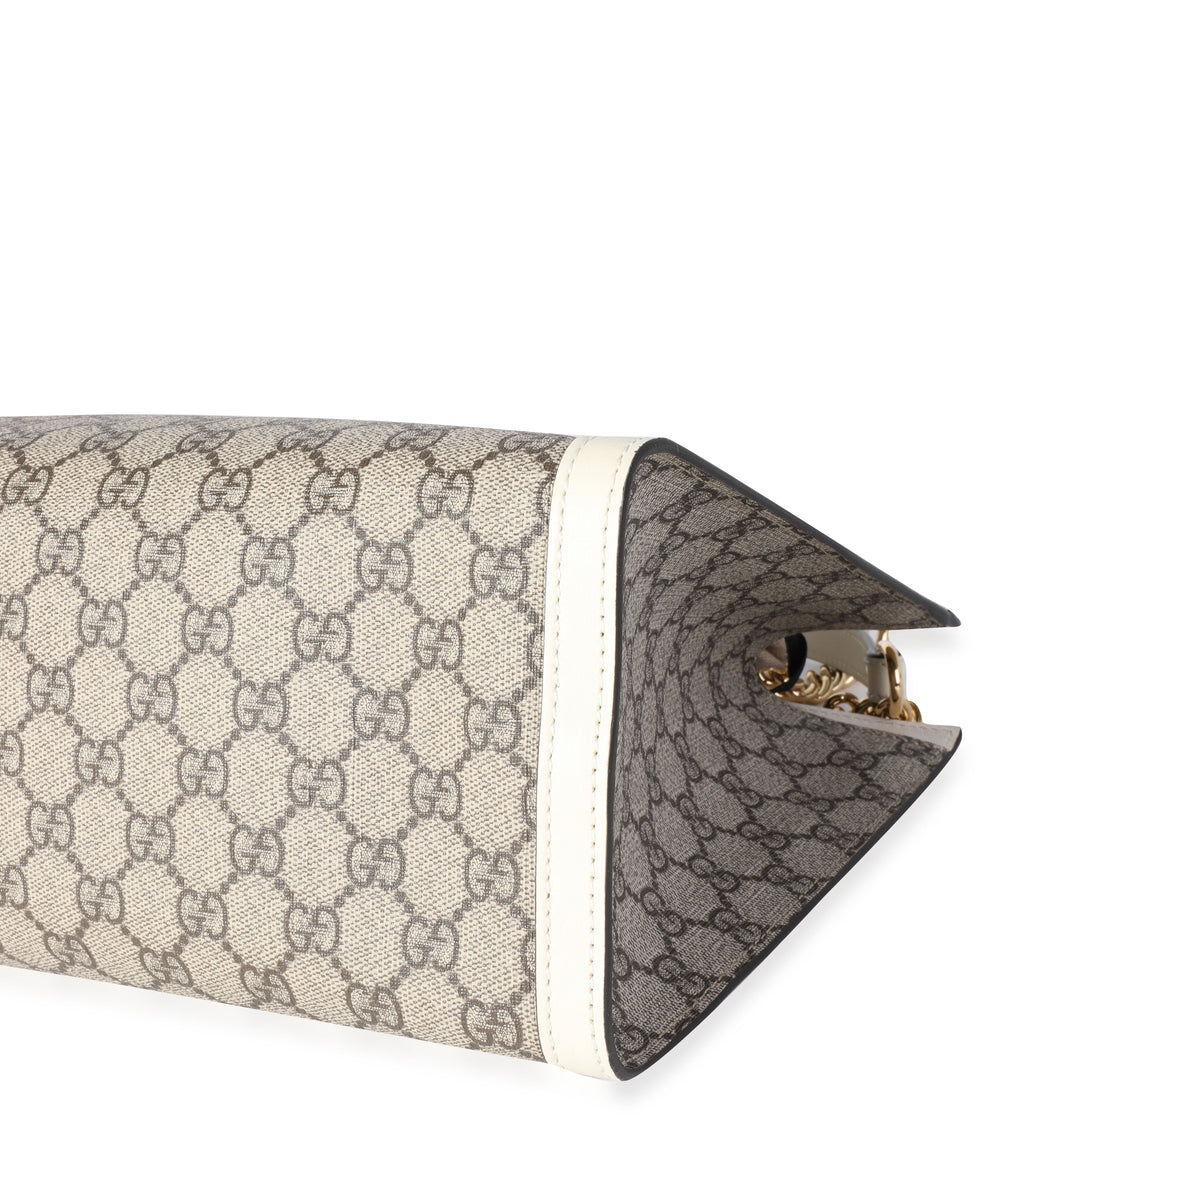 Gucci GG Supreme & White Leather Medium Padlock Shoulder Bag